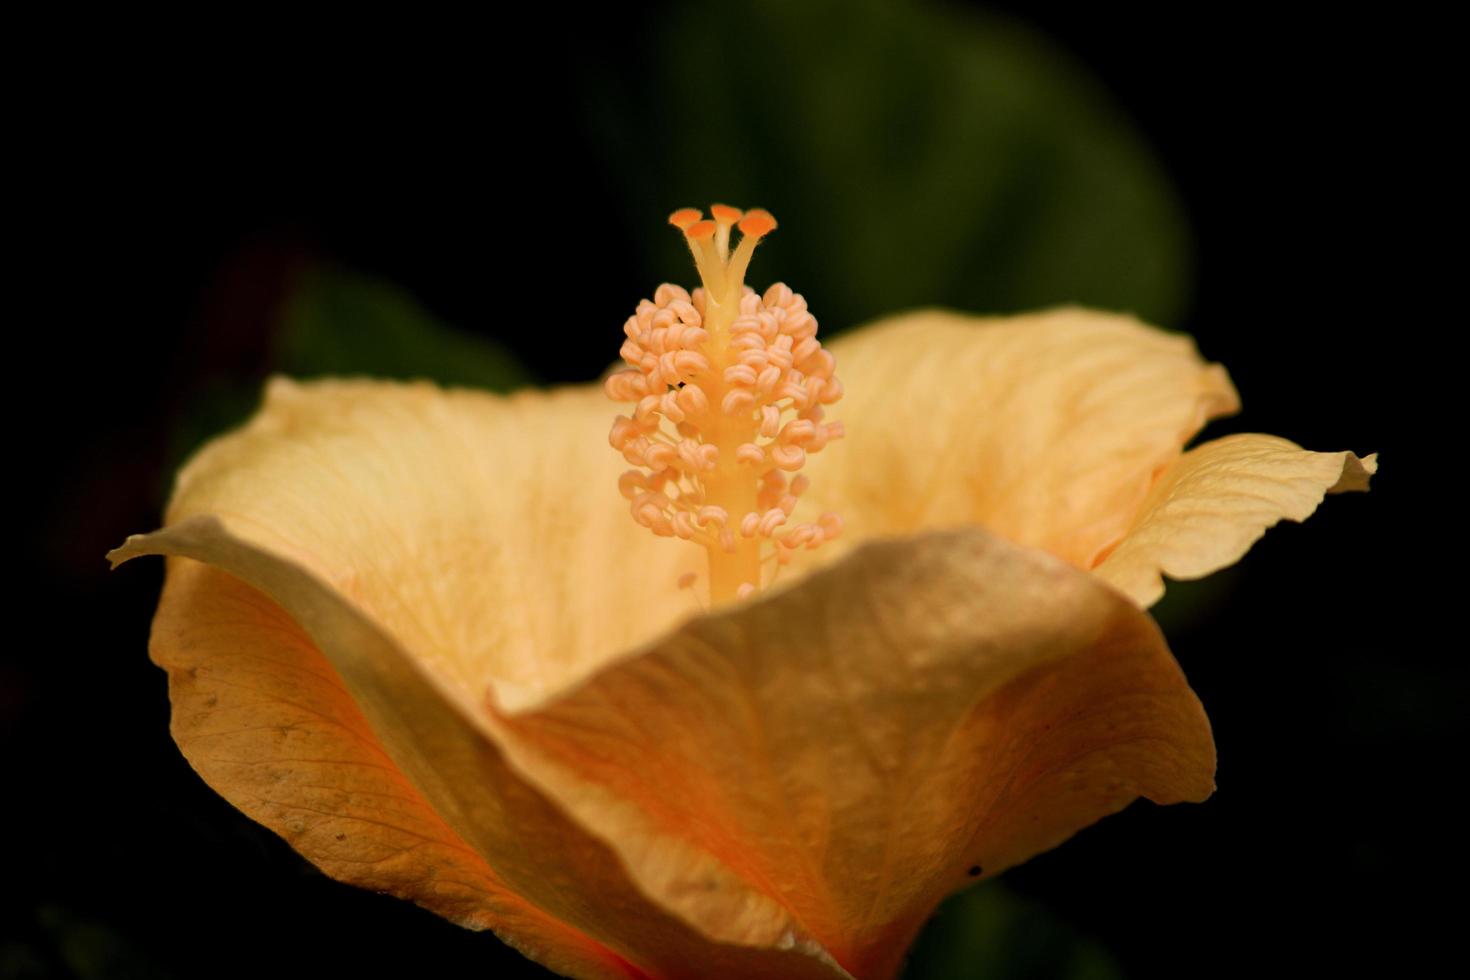 Orange flower petals and stigma photo